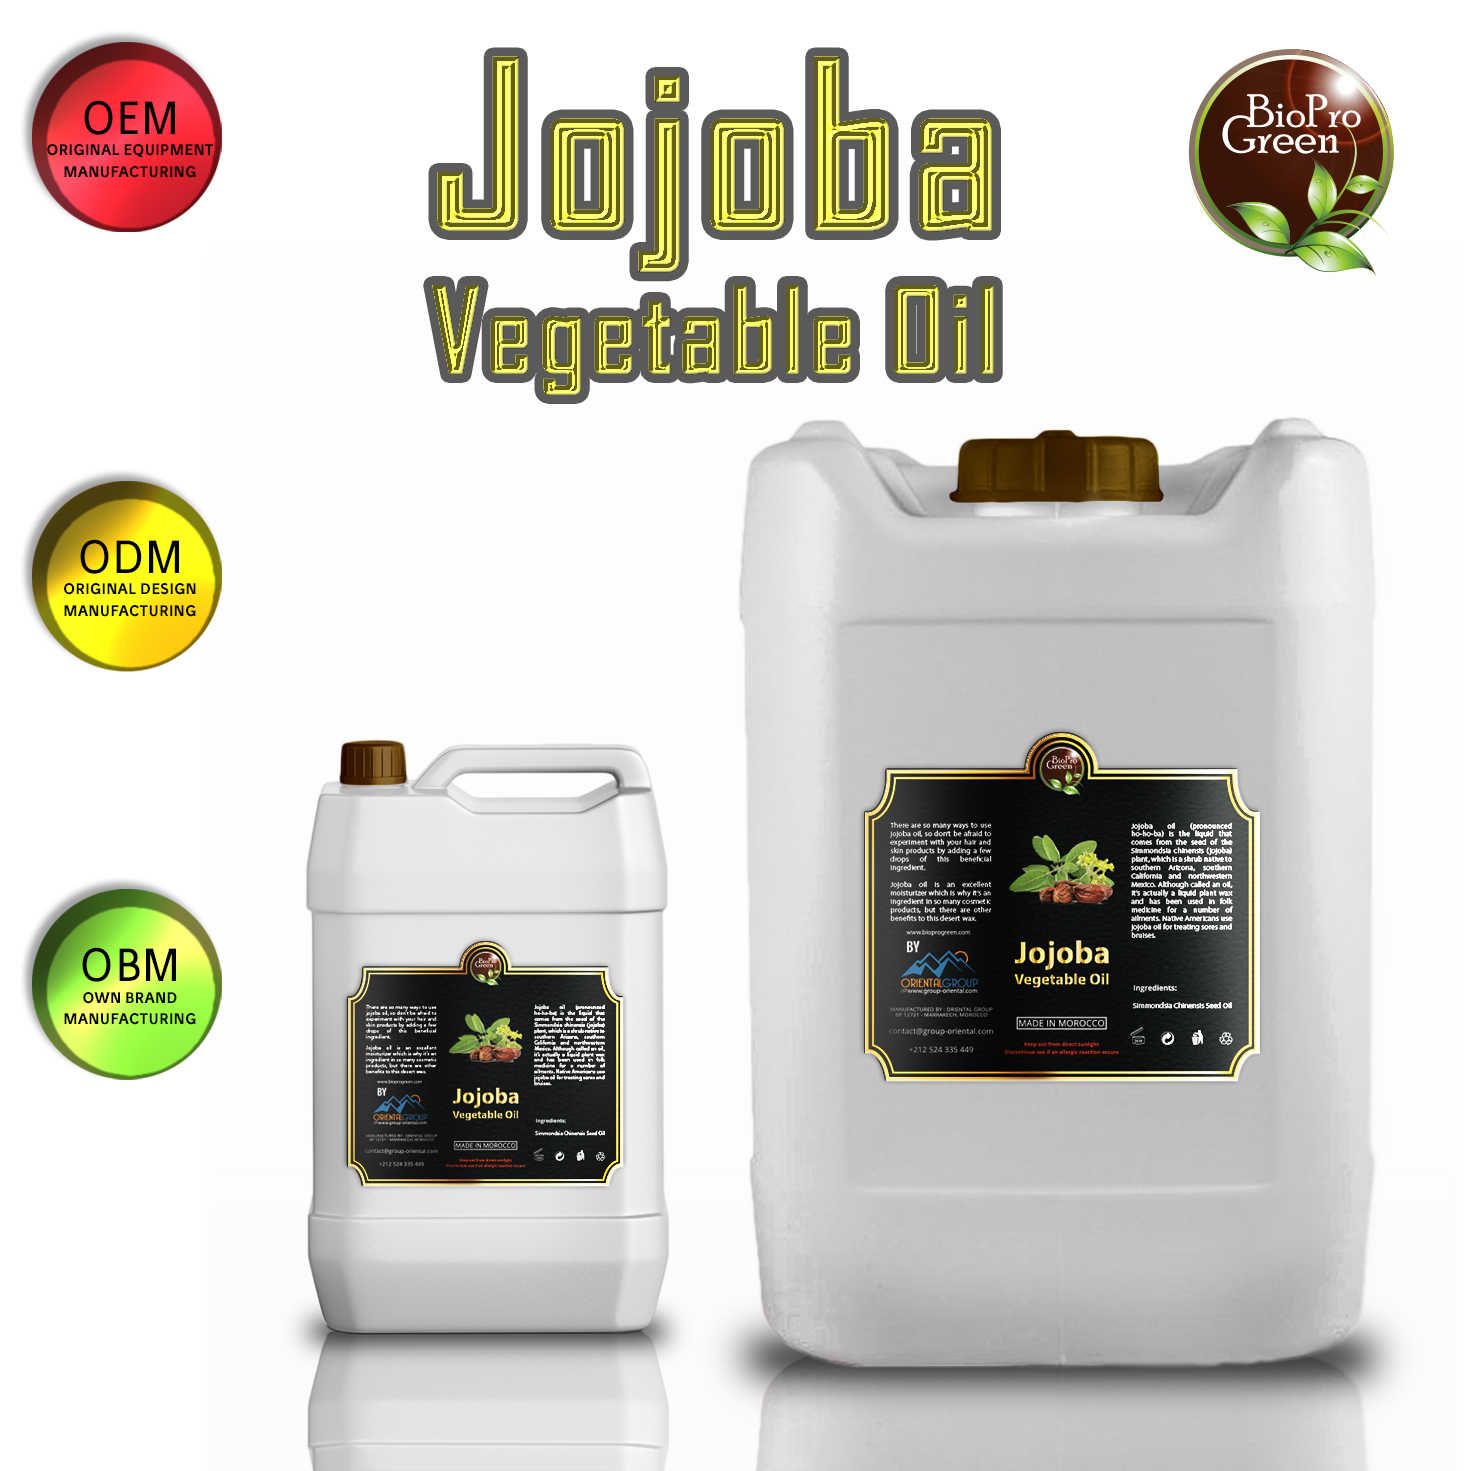 Jojoba vetetable oil - FABRICANT ET FOURNISSEUR D'HUILES ESSENTIELLES1